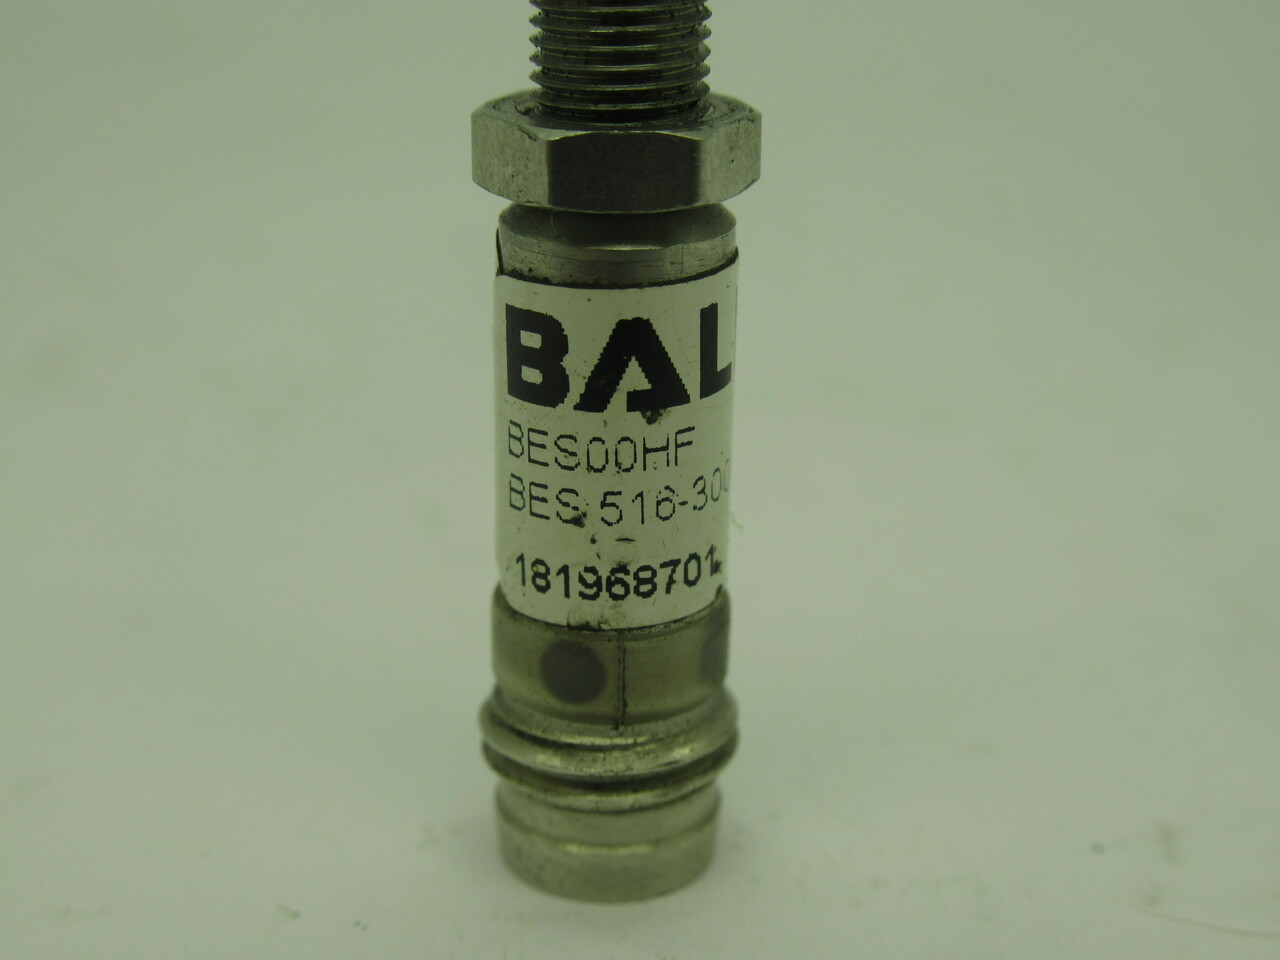 Balluff BES 516-3005-G-E5-C-S49 Inductive Sensor 10-30VDC 1.5mm NO HARDWARE USED